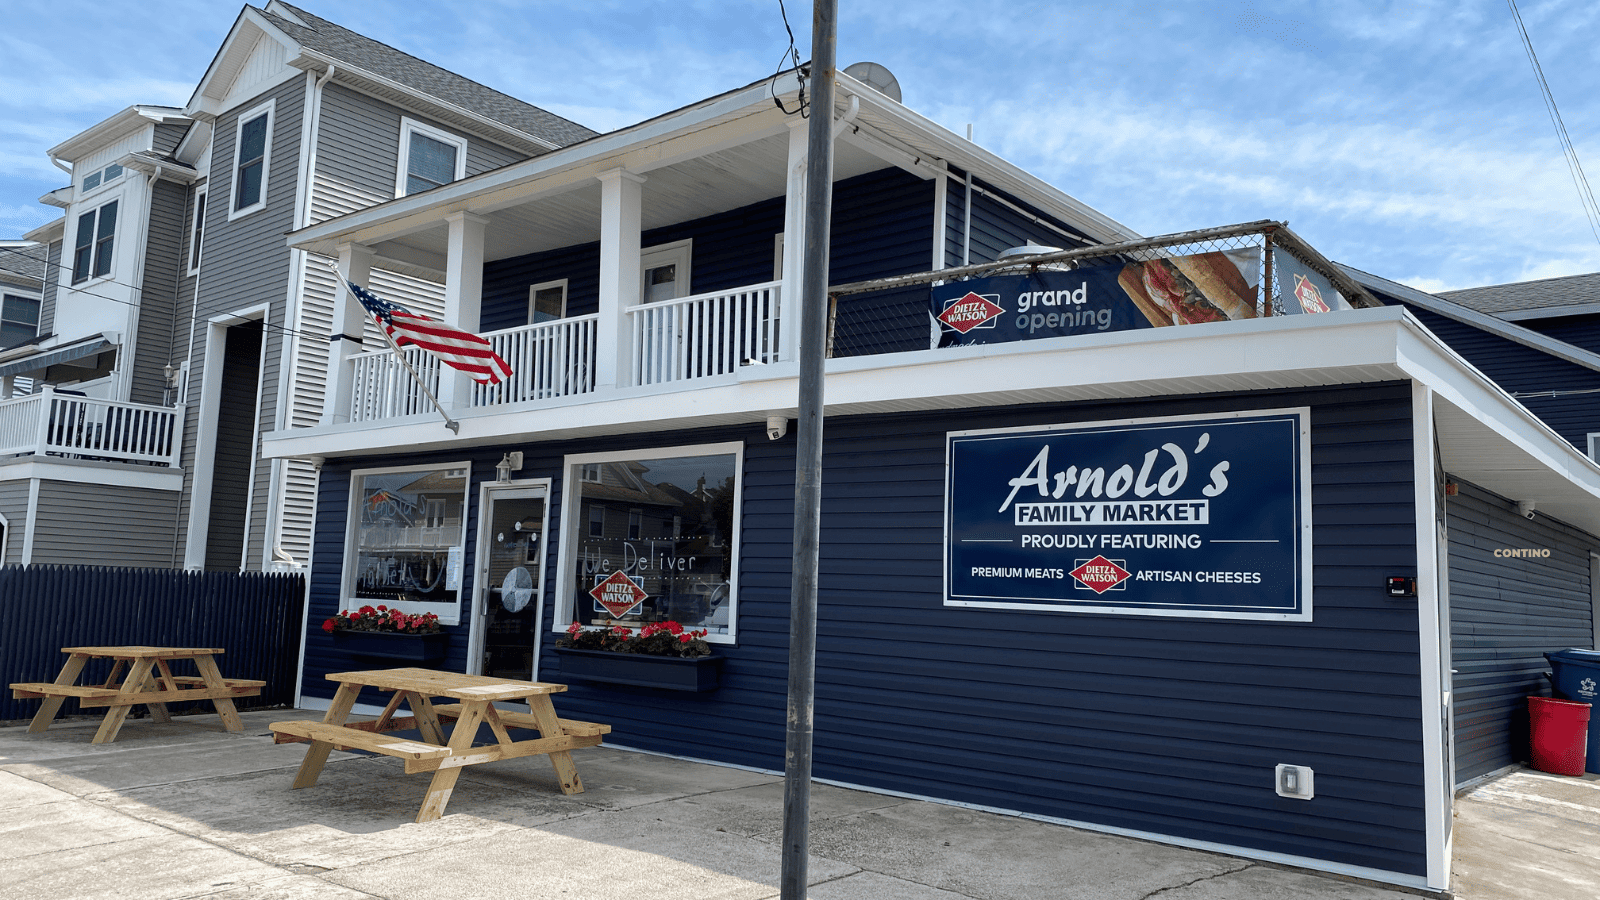 NEW - Arnold's Family Market